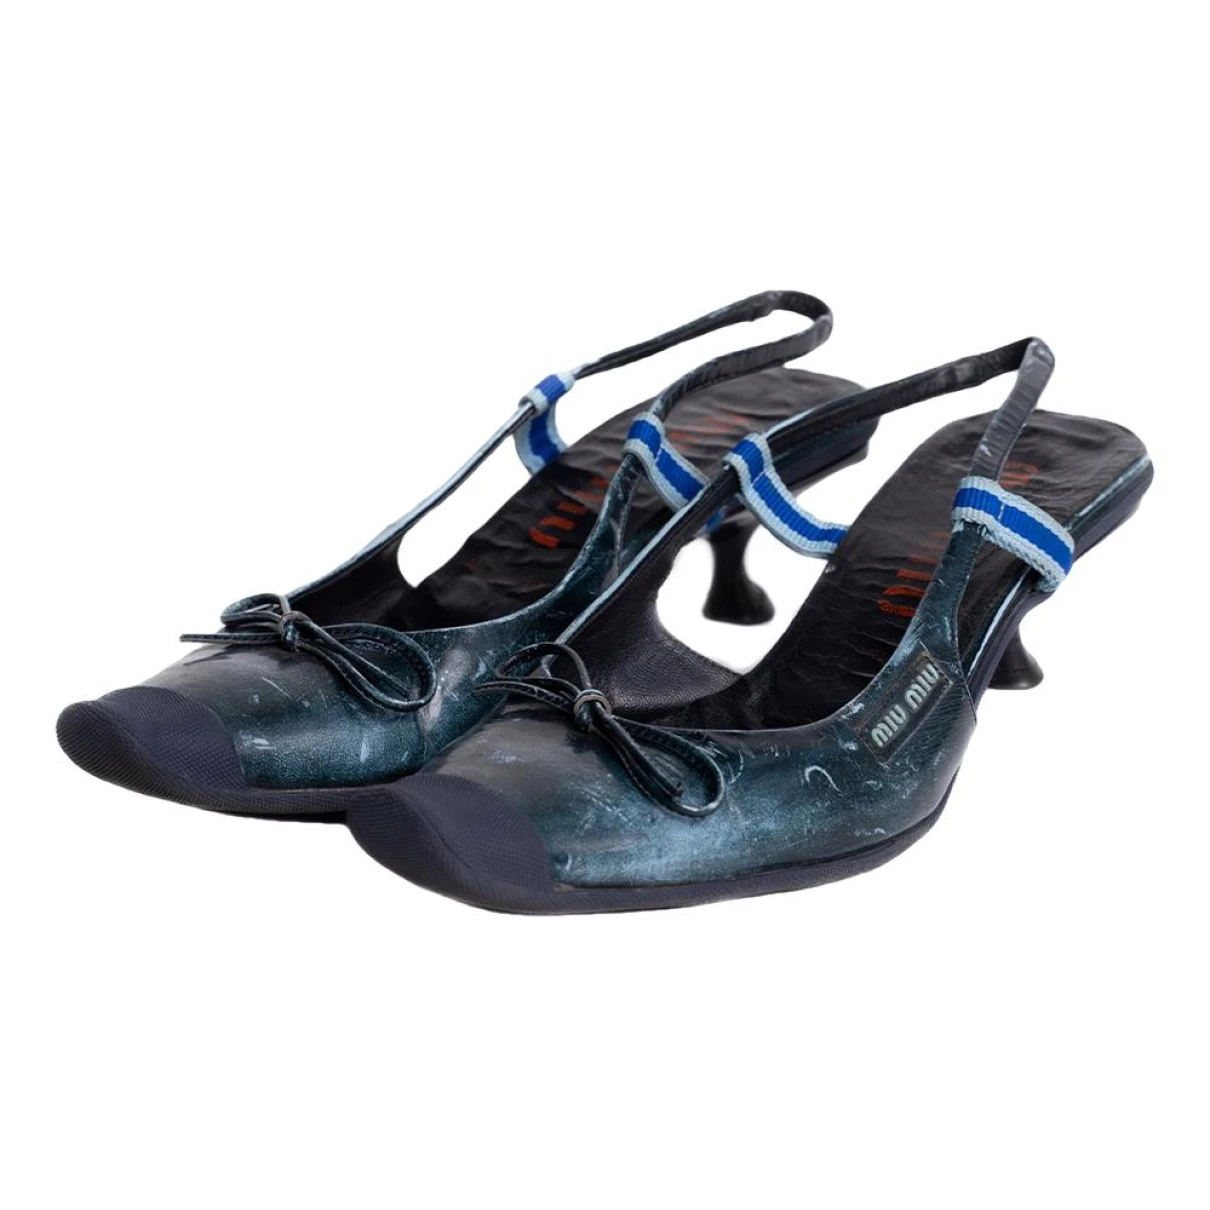 shoes Miu Miu mules & clogs for Female Leather 37 EU. Used condition